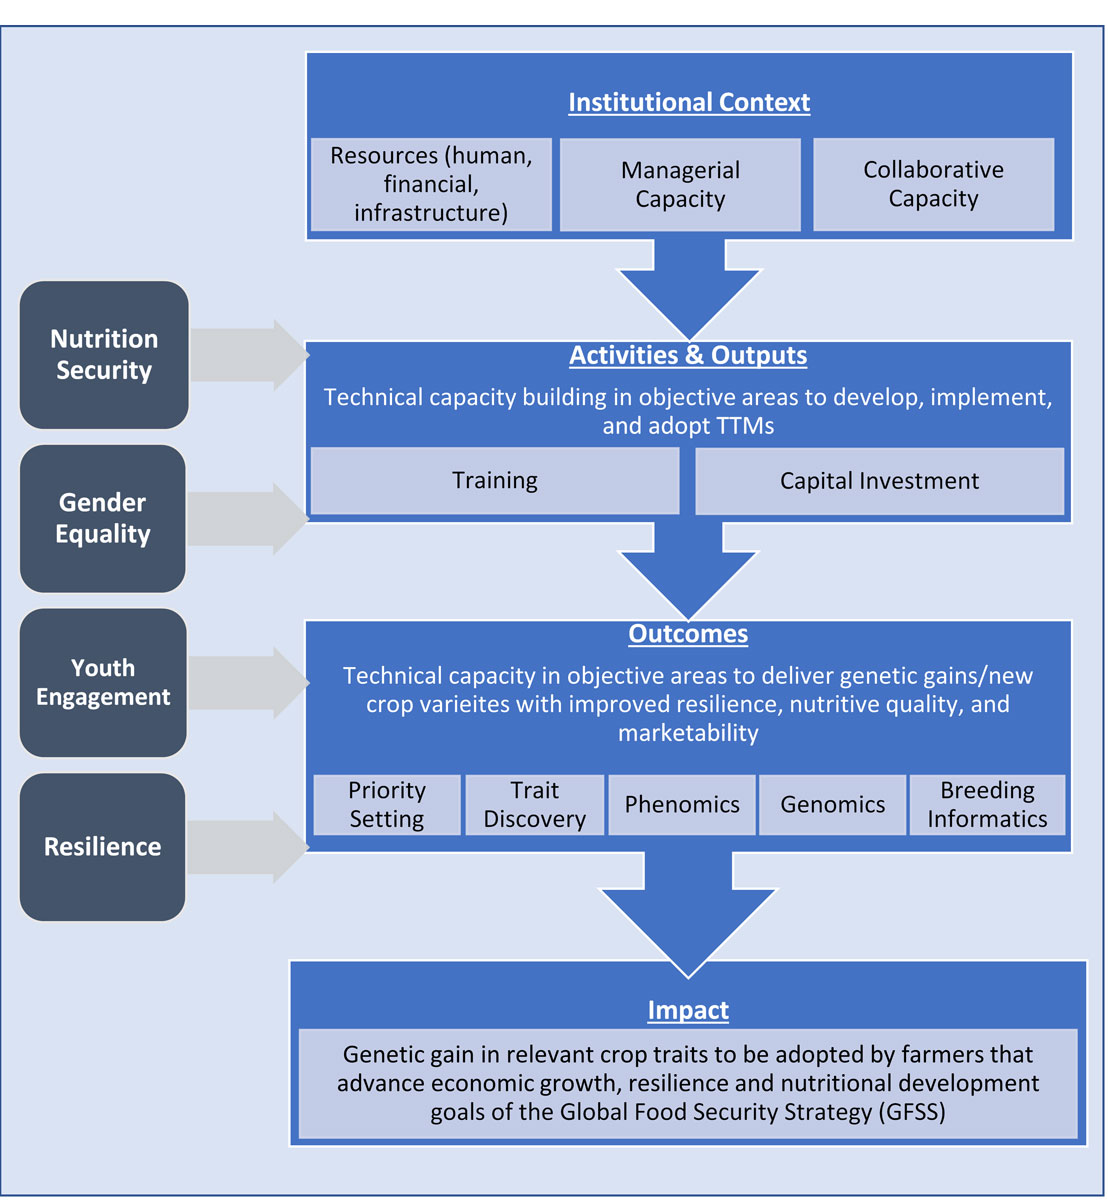 Conceptual framework for institutional capacity